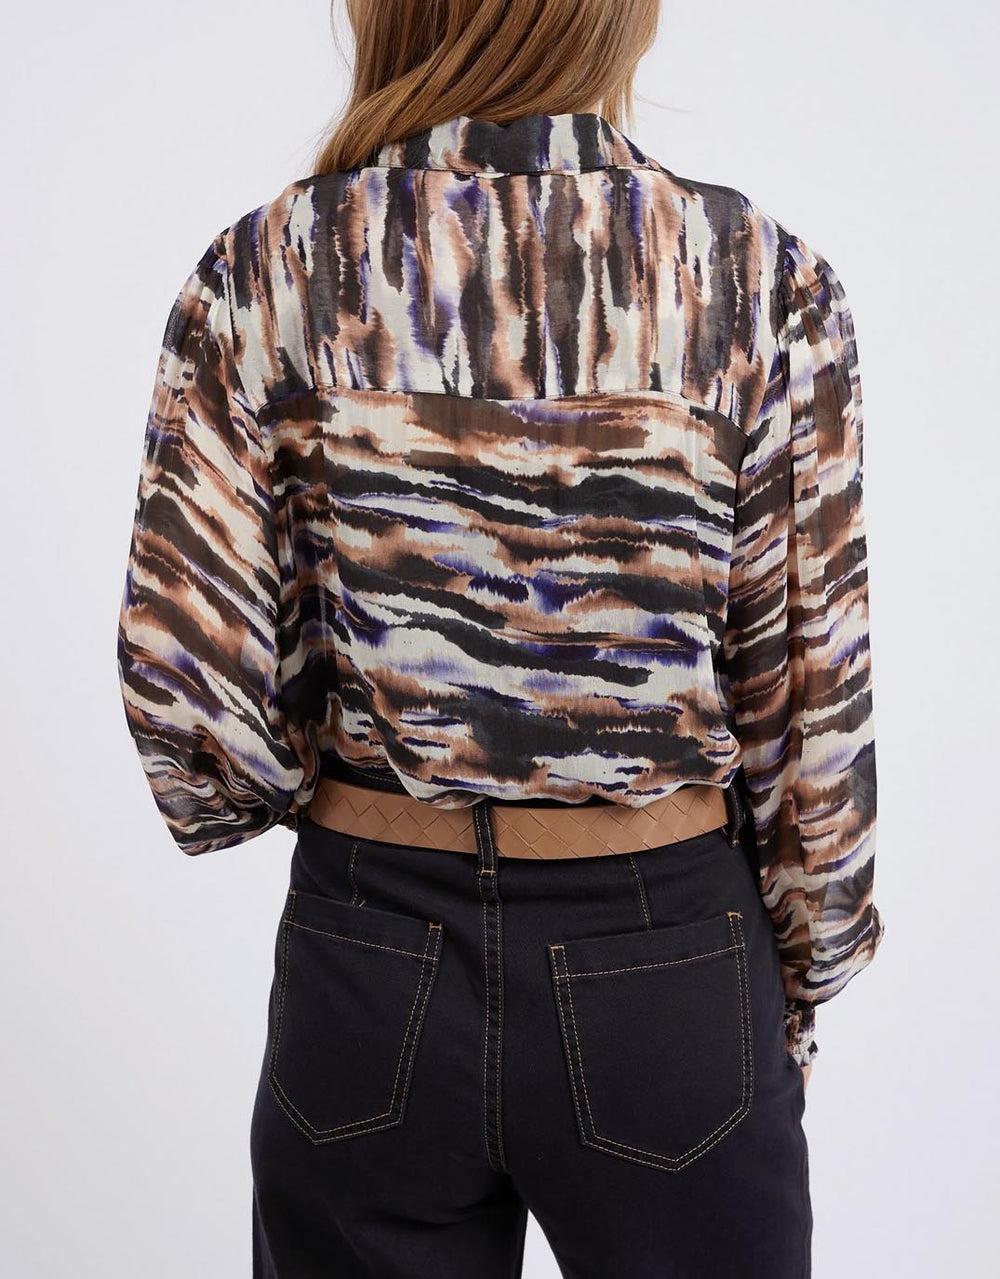 foxwood-mala-abstract-blouse-mala-abstract-womens-clothing